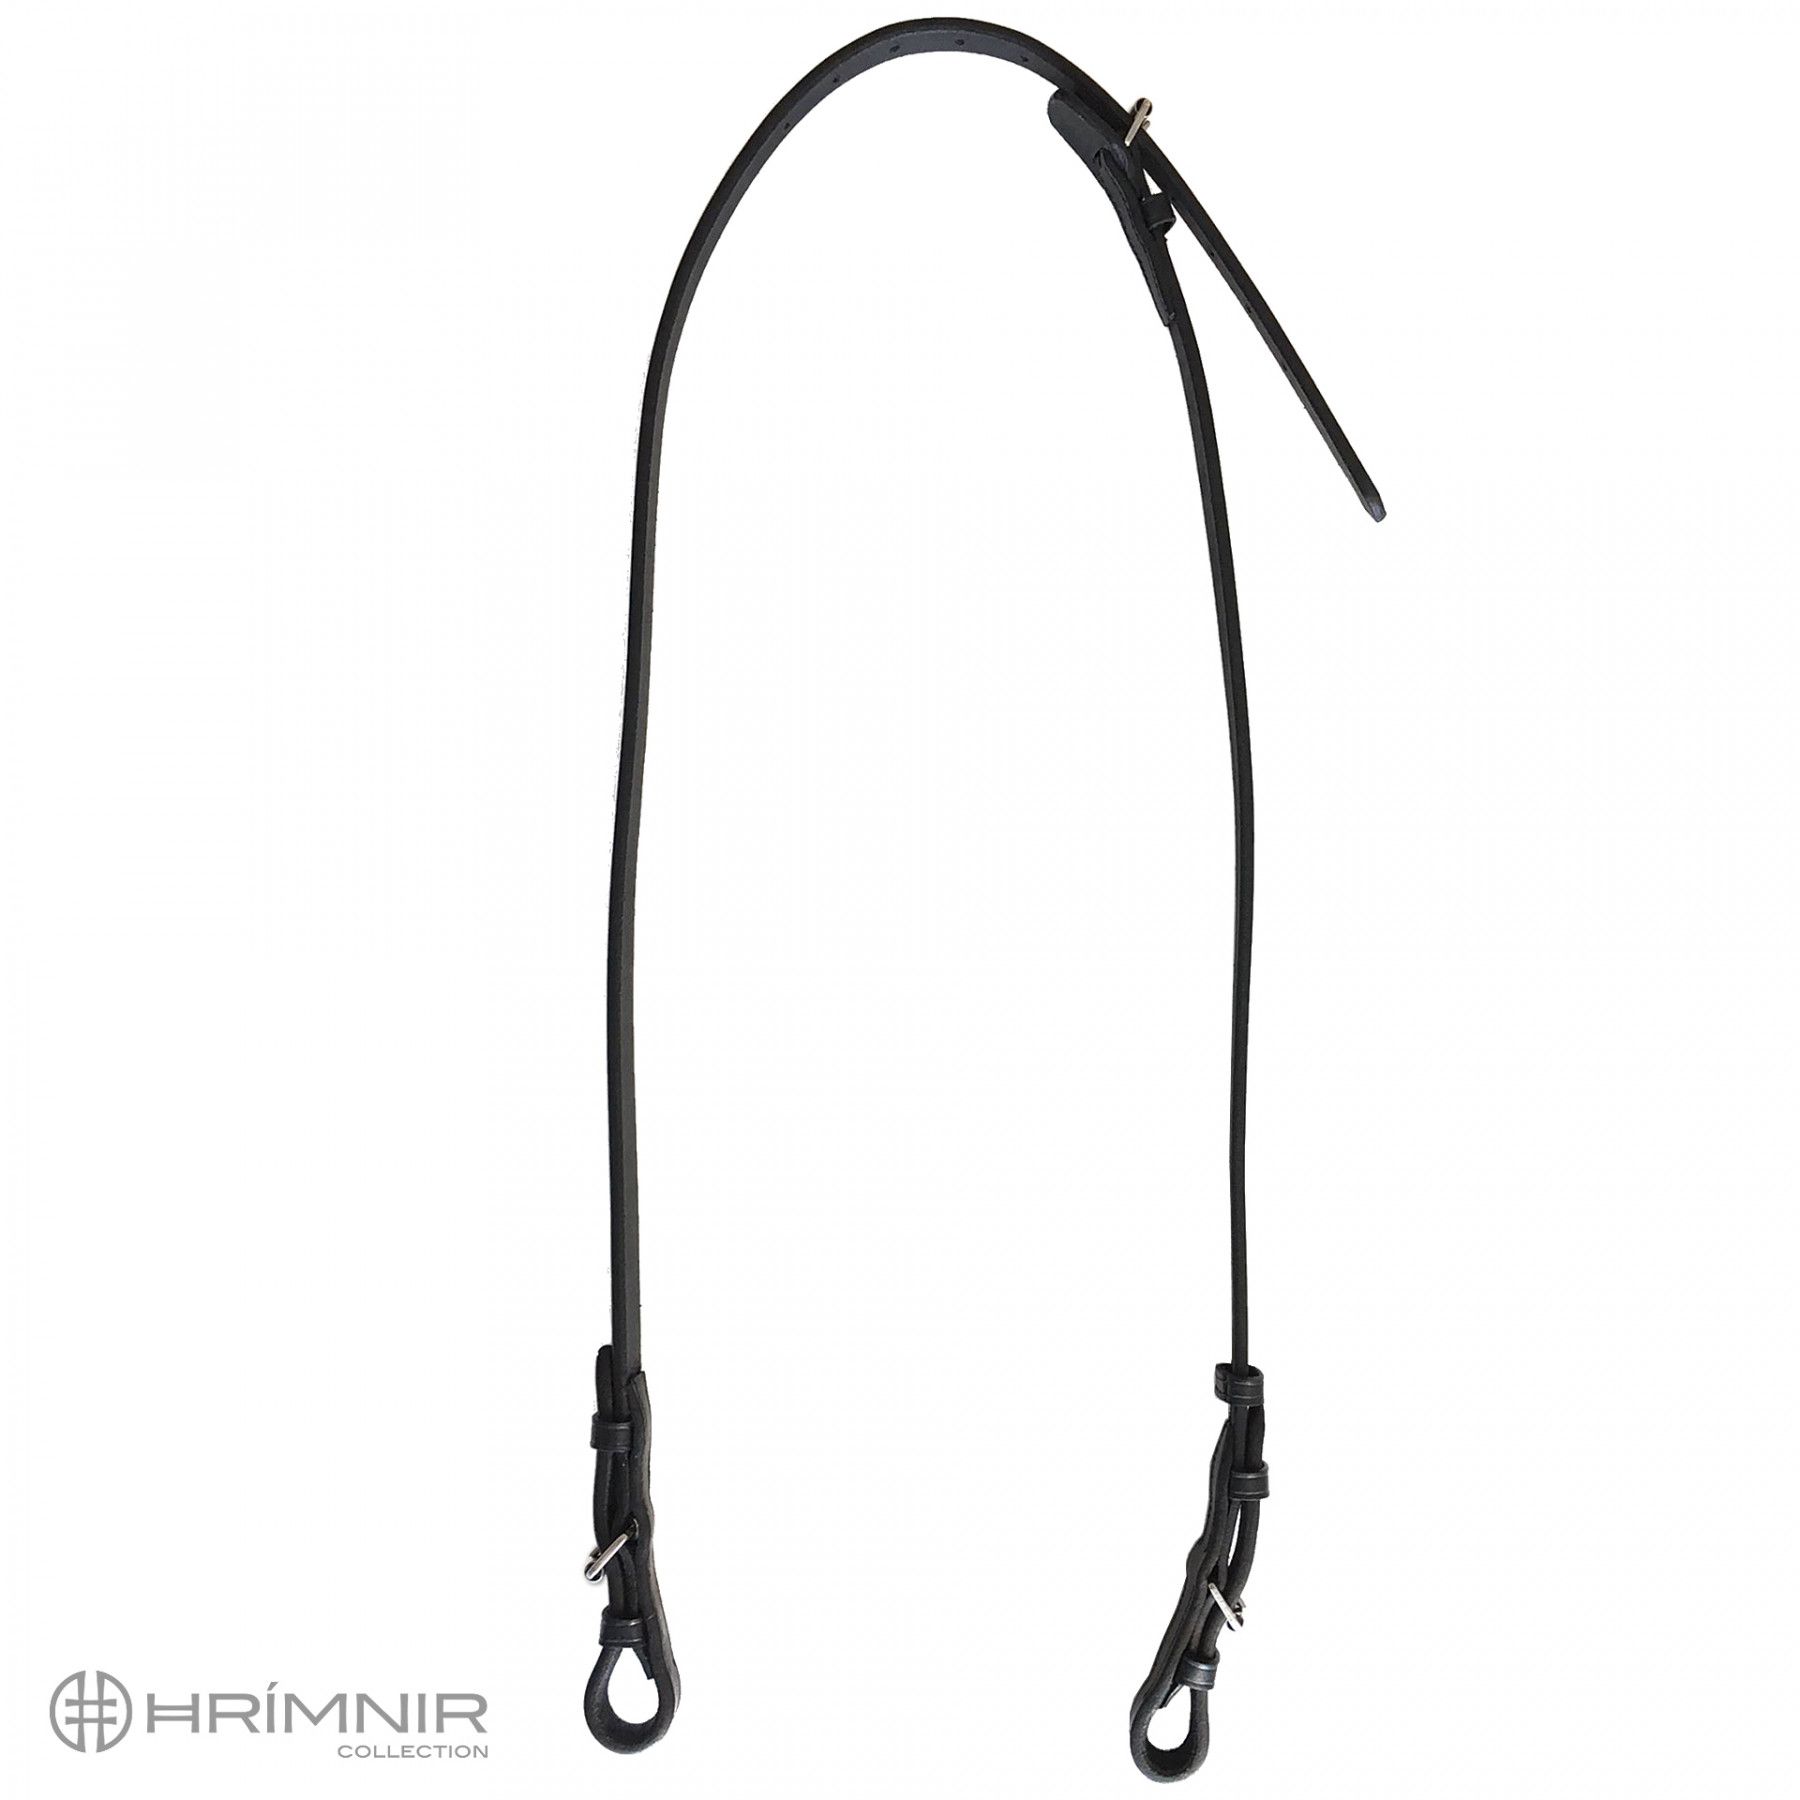 Bit straps | Bridles and attachments - Hrimnir